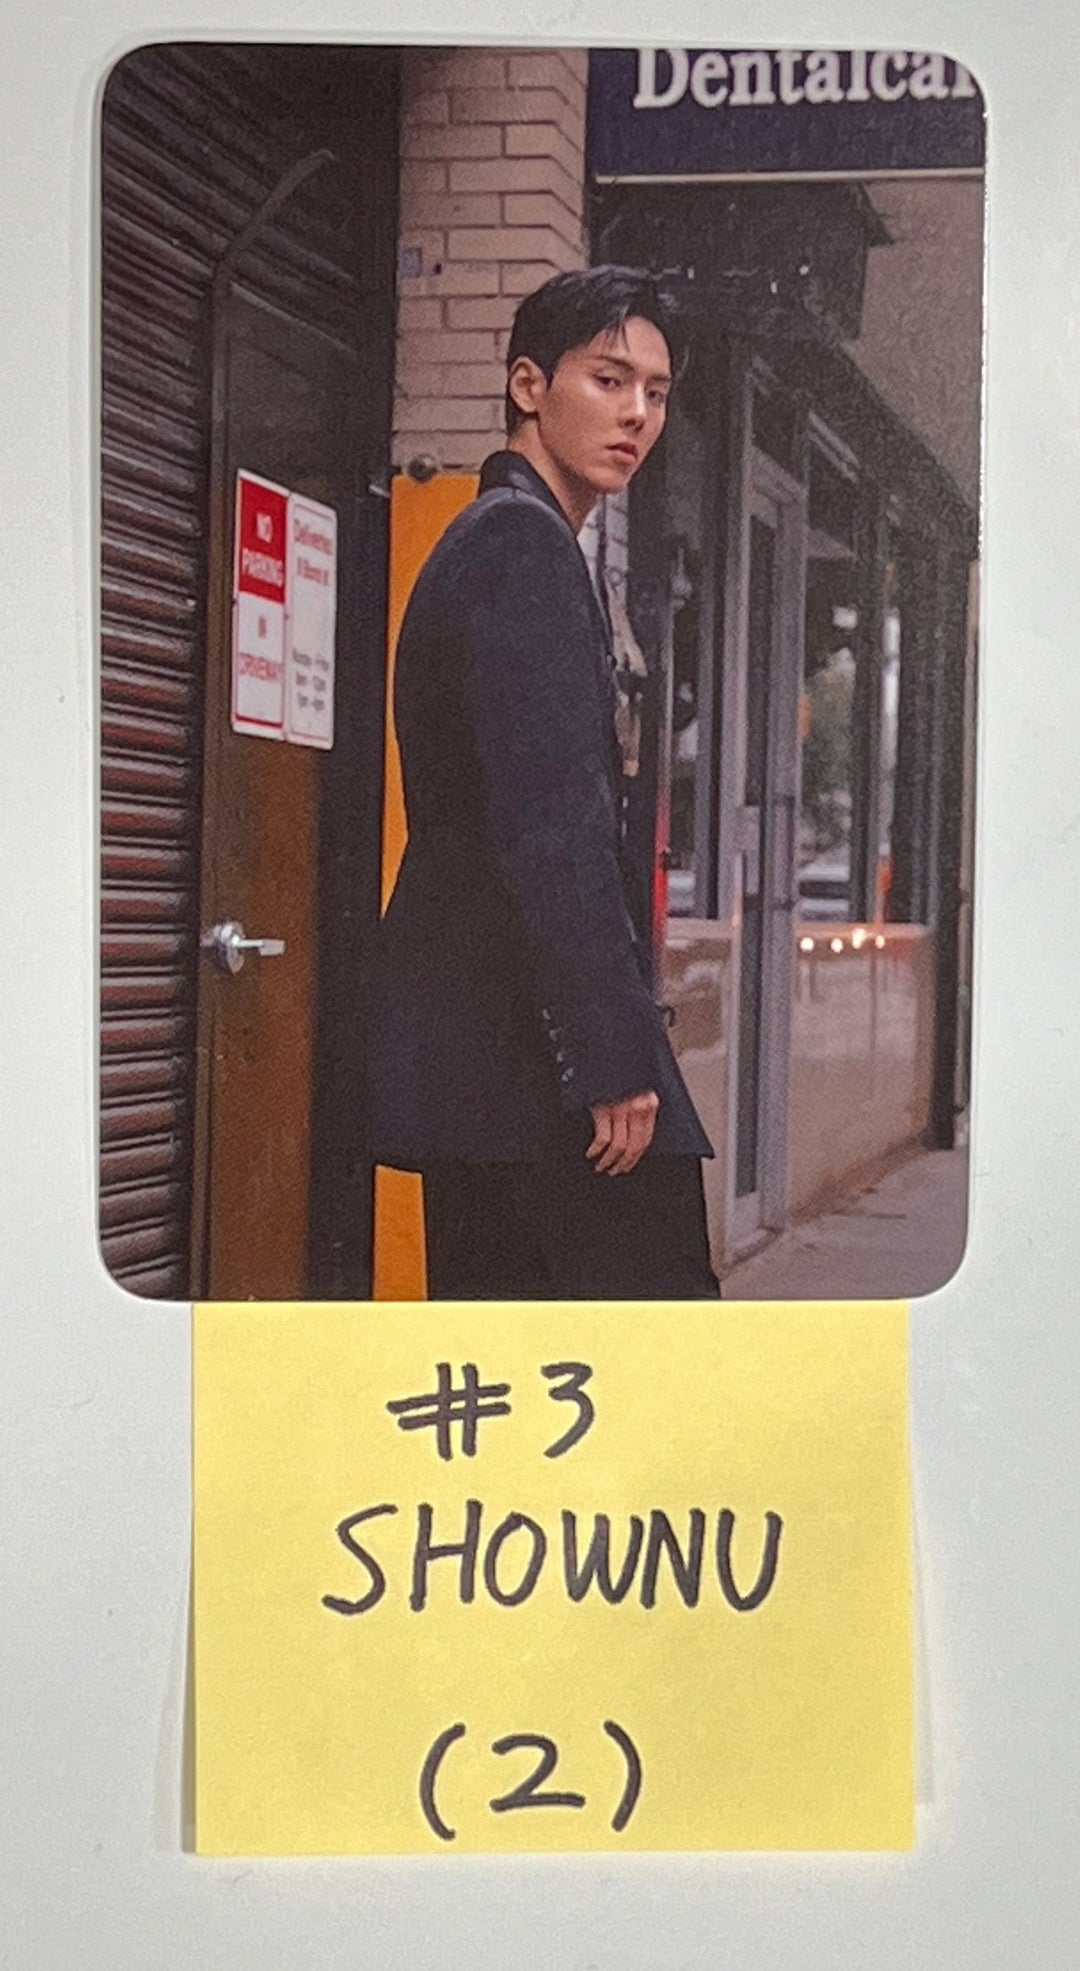 Shownu X Hyungwon "On My Way" 1st Photobook - Official Random Photocard [23.12.19]